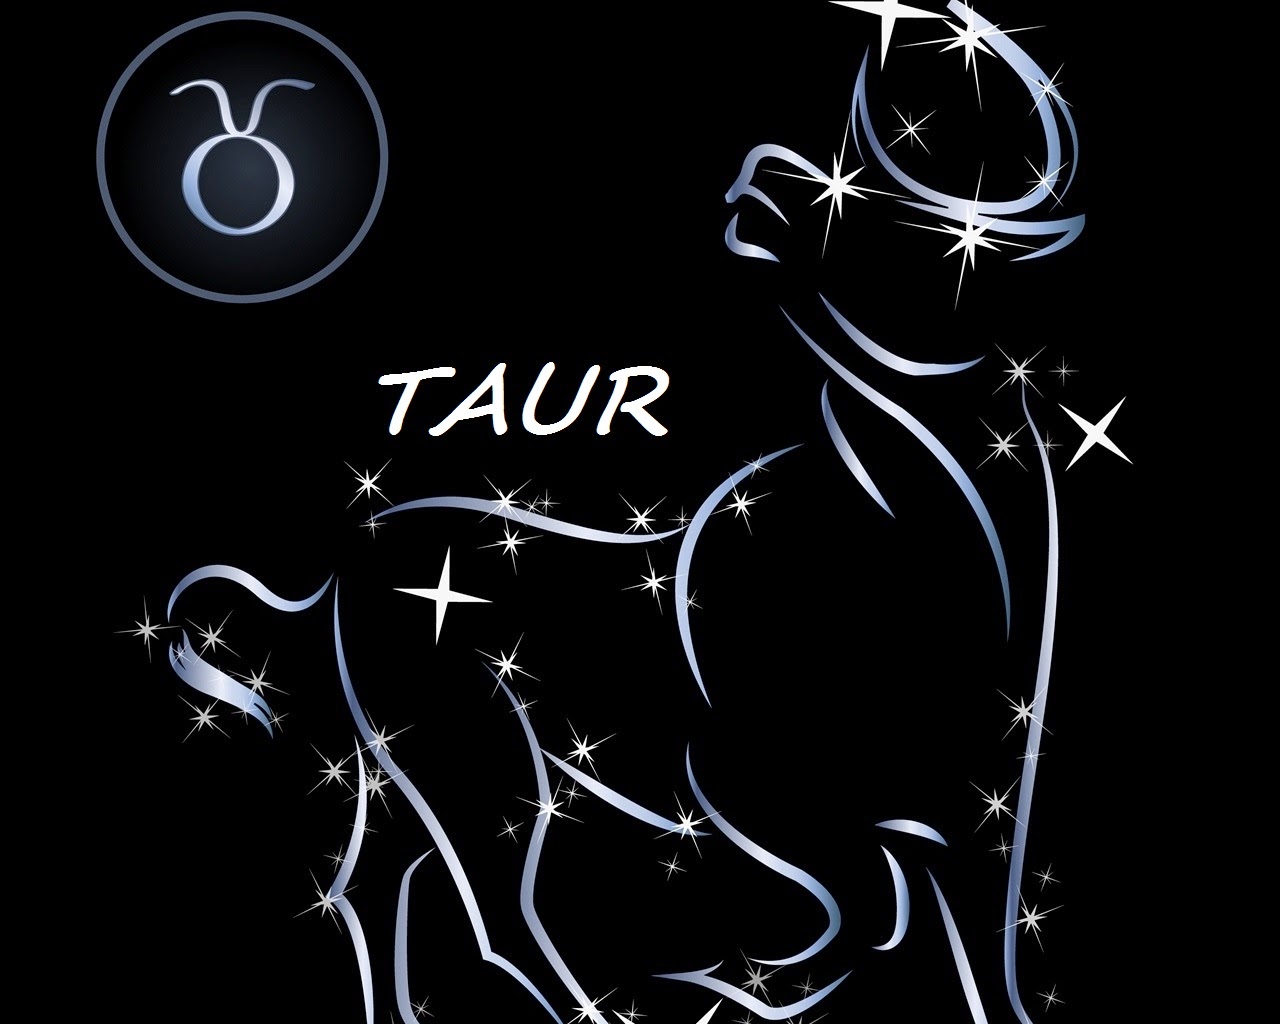 Horoscop 12 august